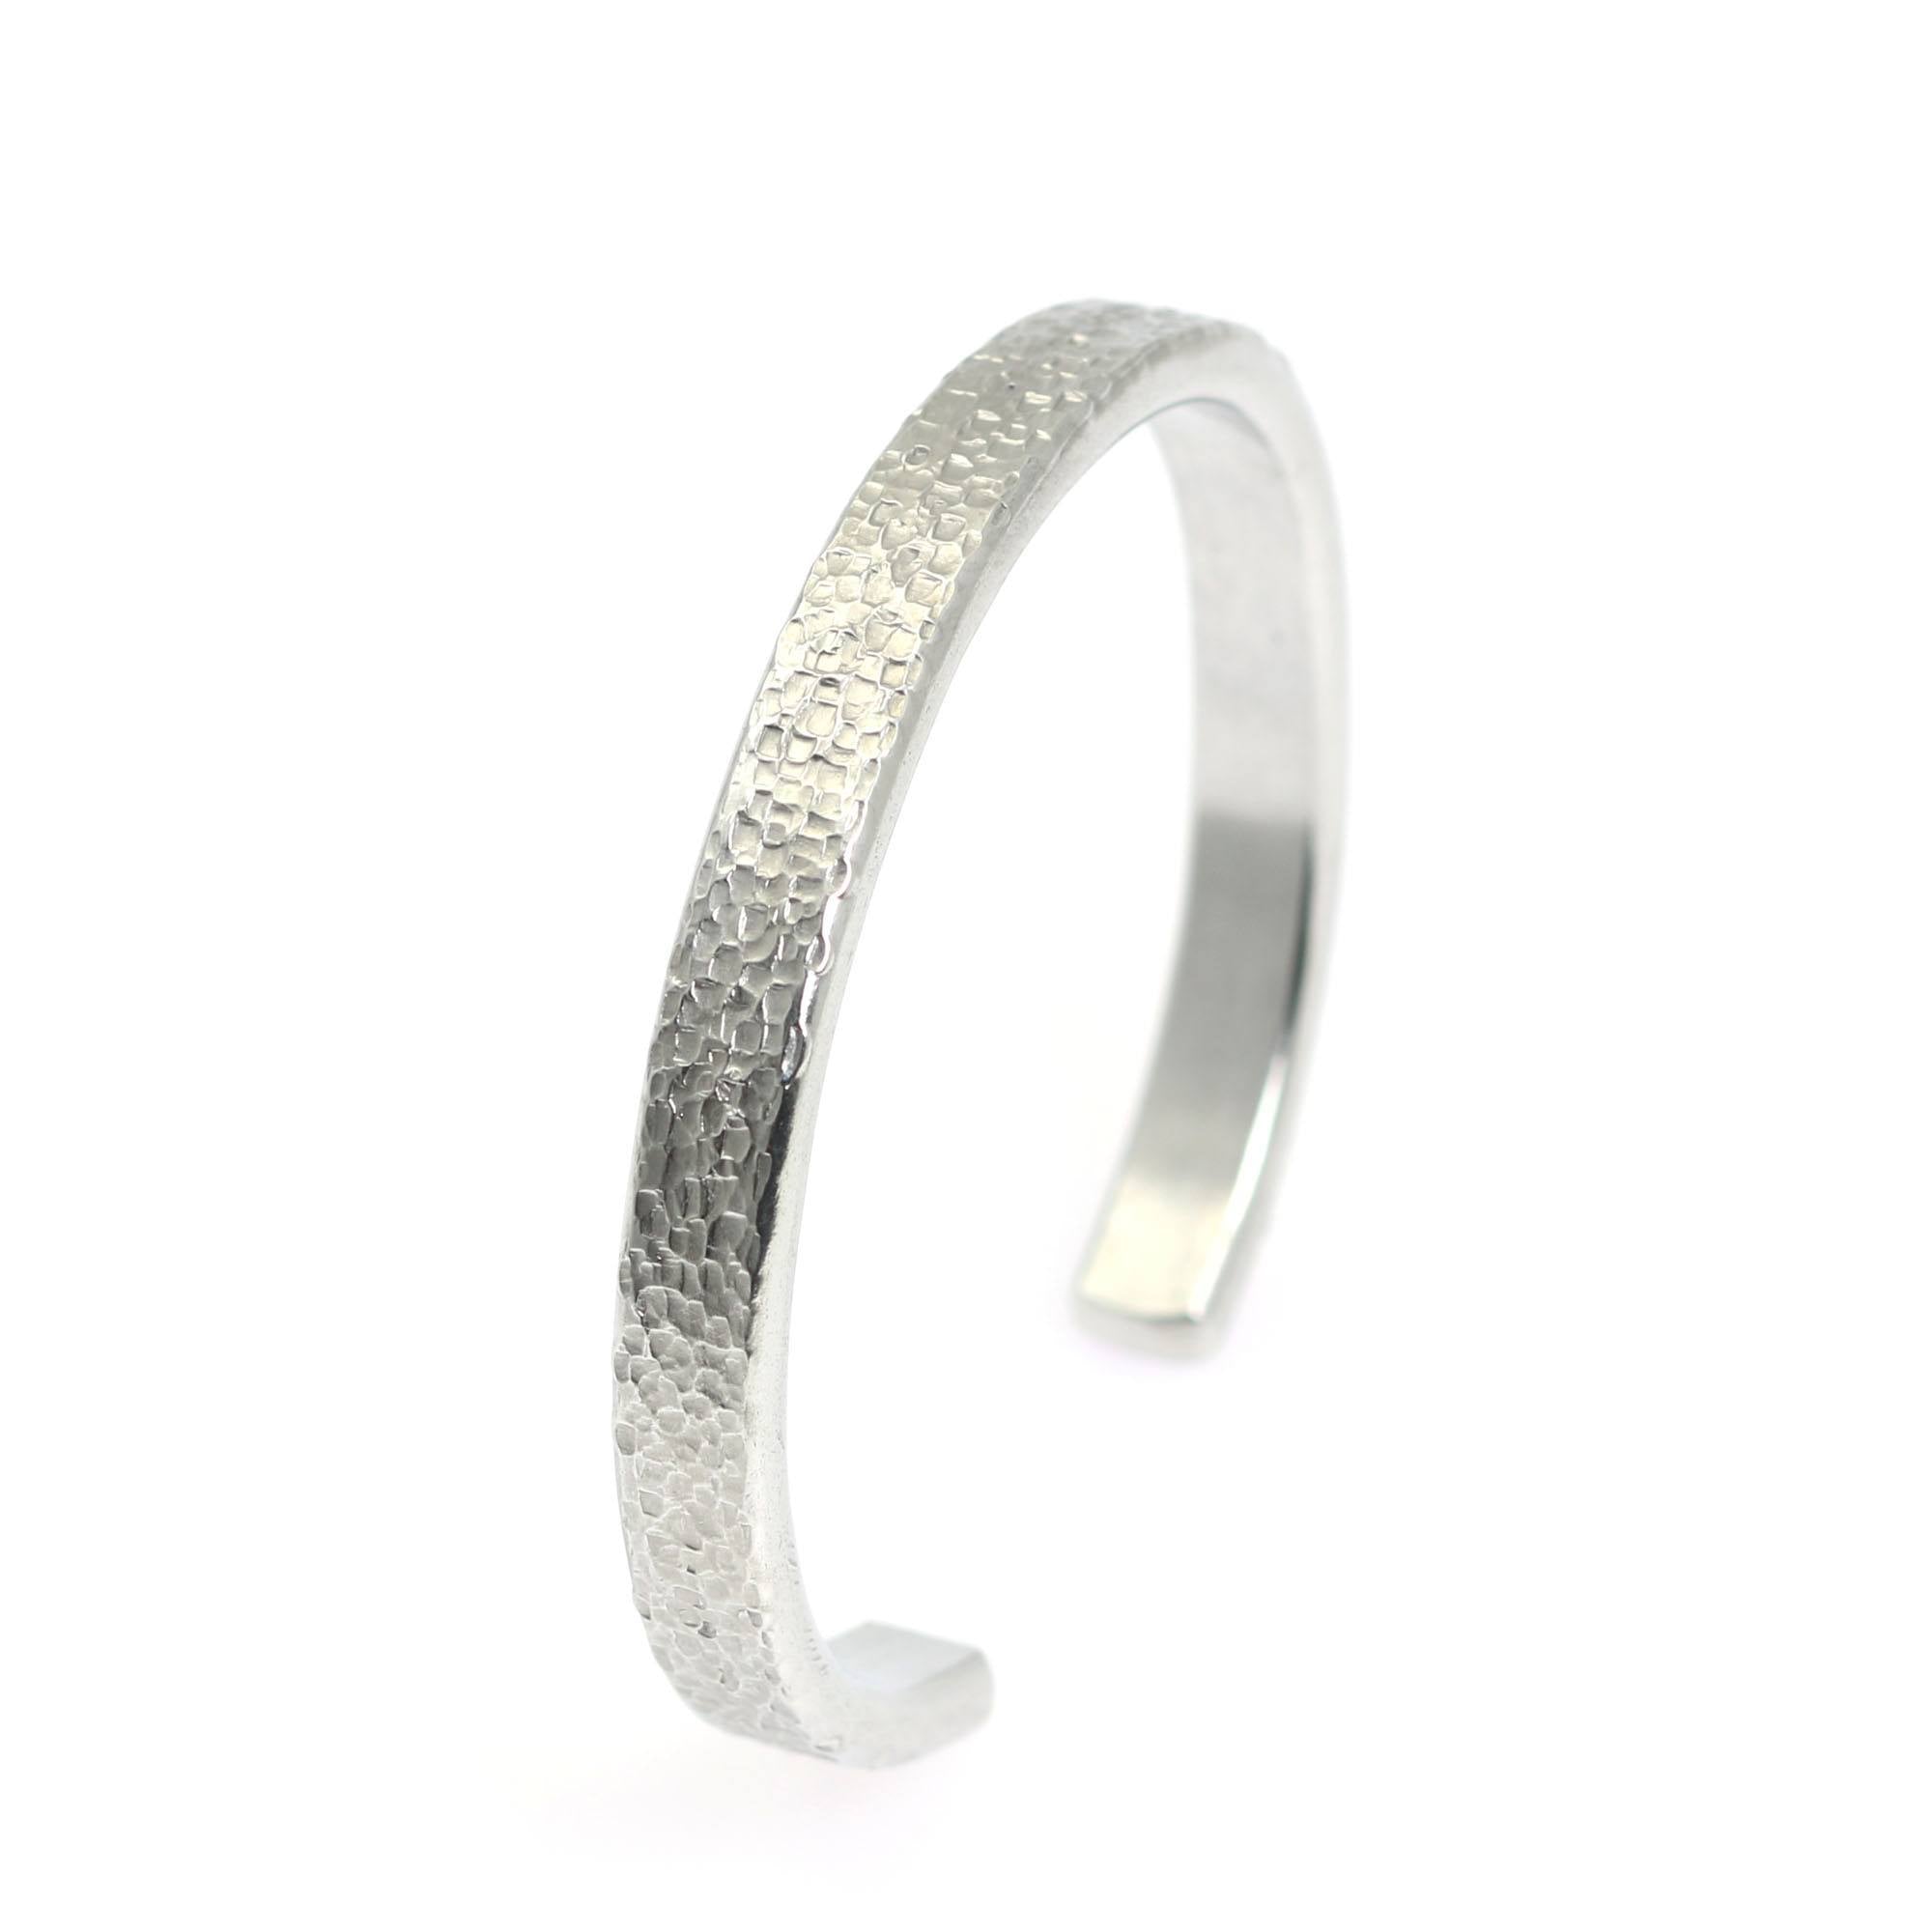 Left View of Thin Texturized Aluminum Cuff Bracelet